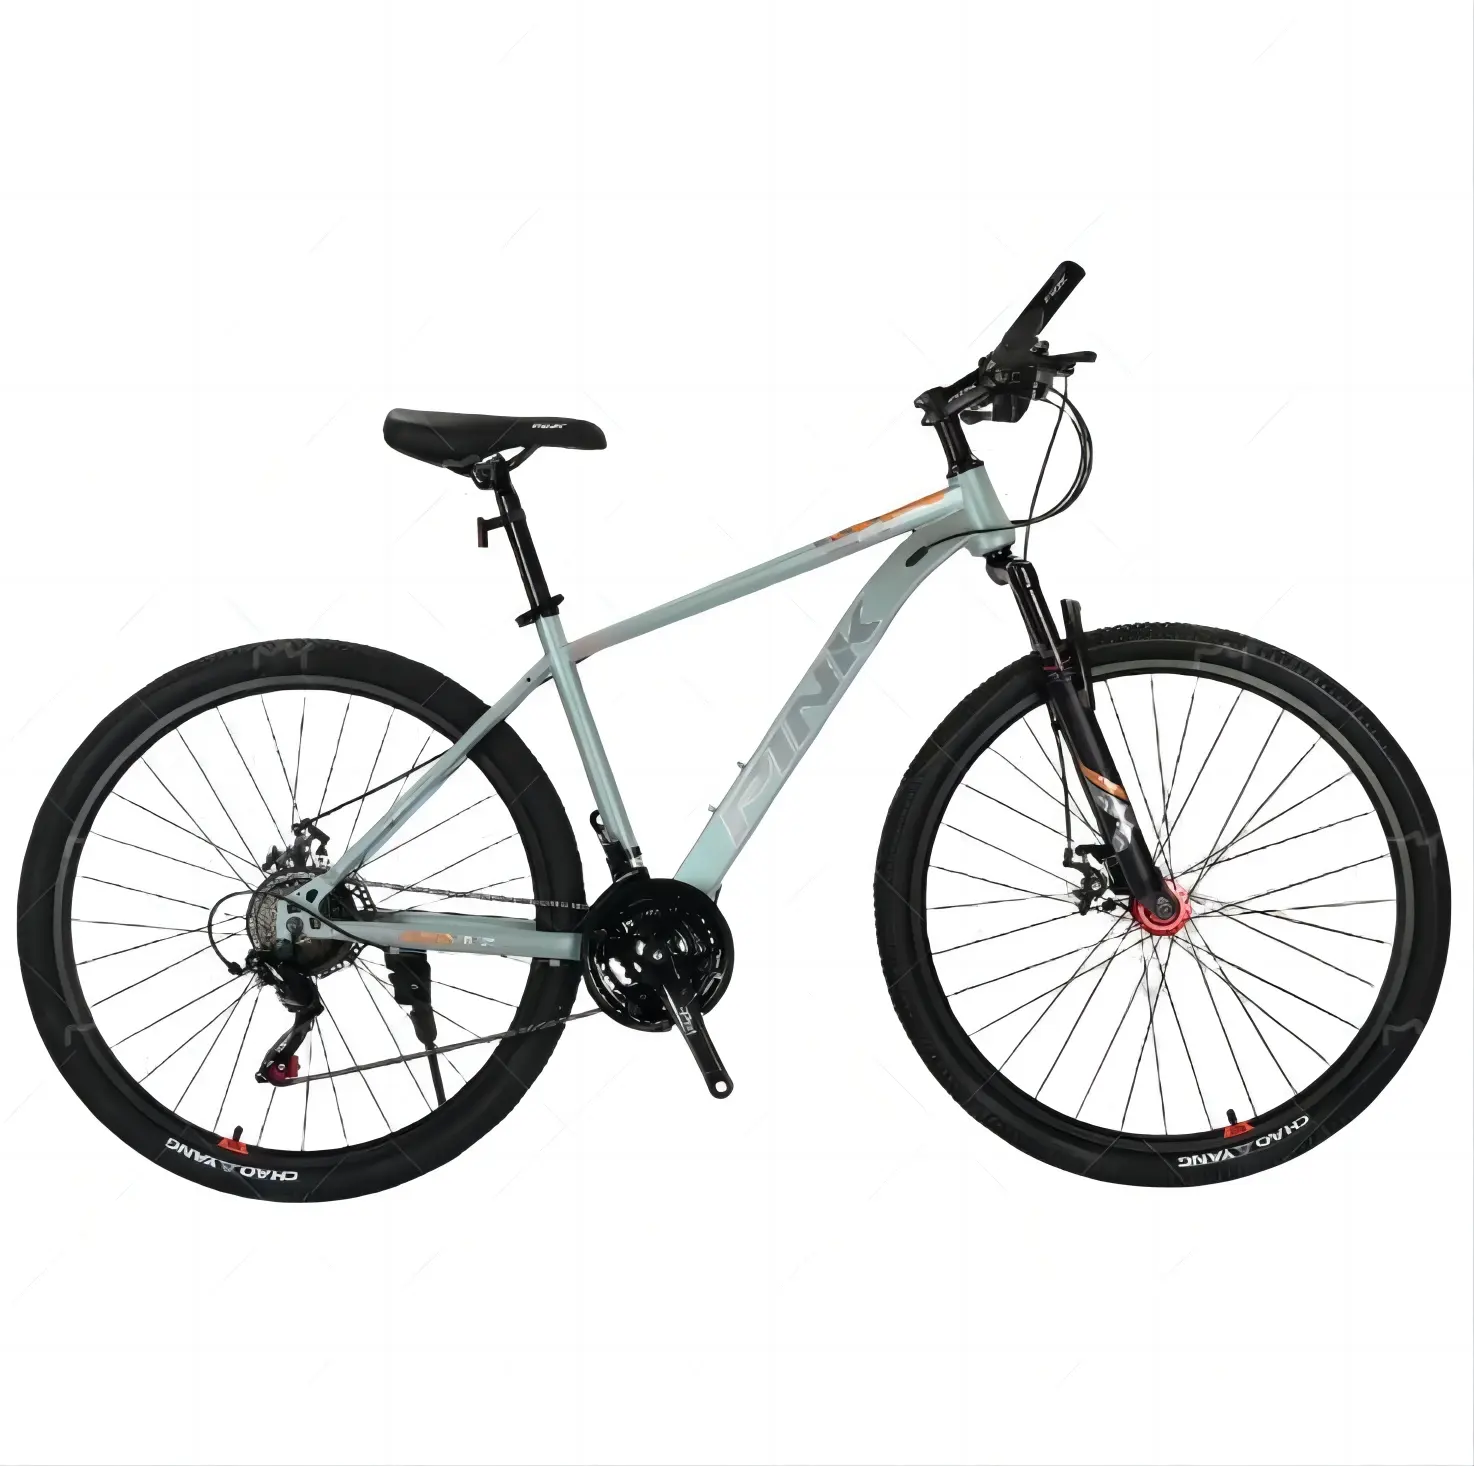 Ligero Phillips 21 velocidad 27,5 pulgadas neumáticos ciclo para hombres bisicletas bicicletas de montaña venta altos hombres mujeres